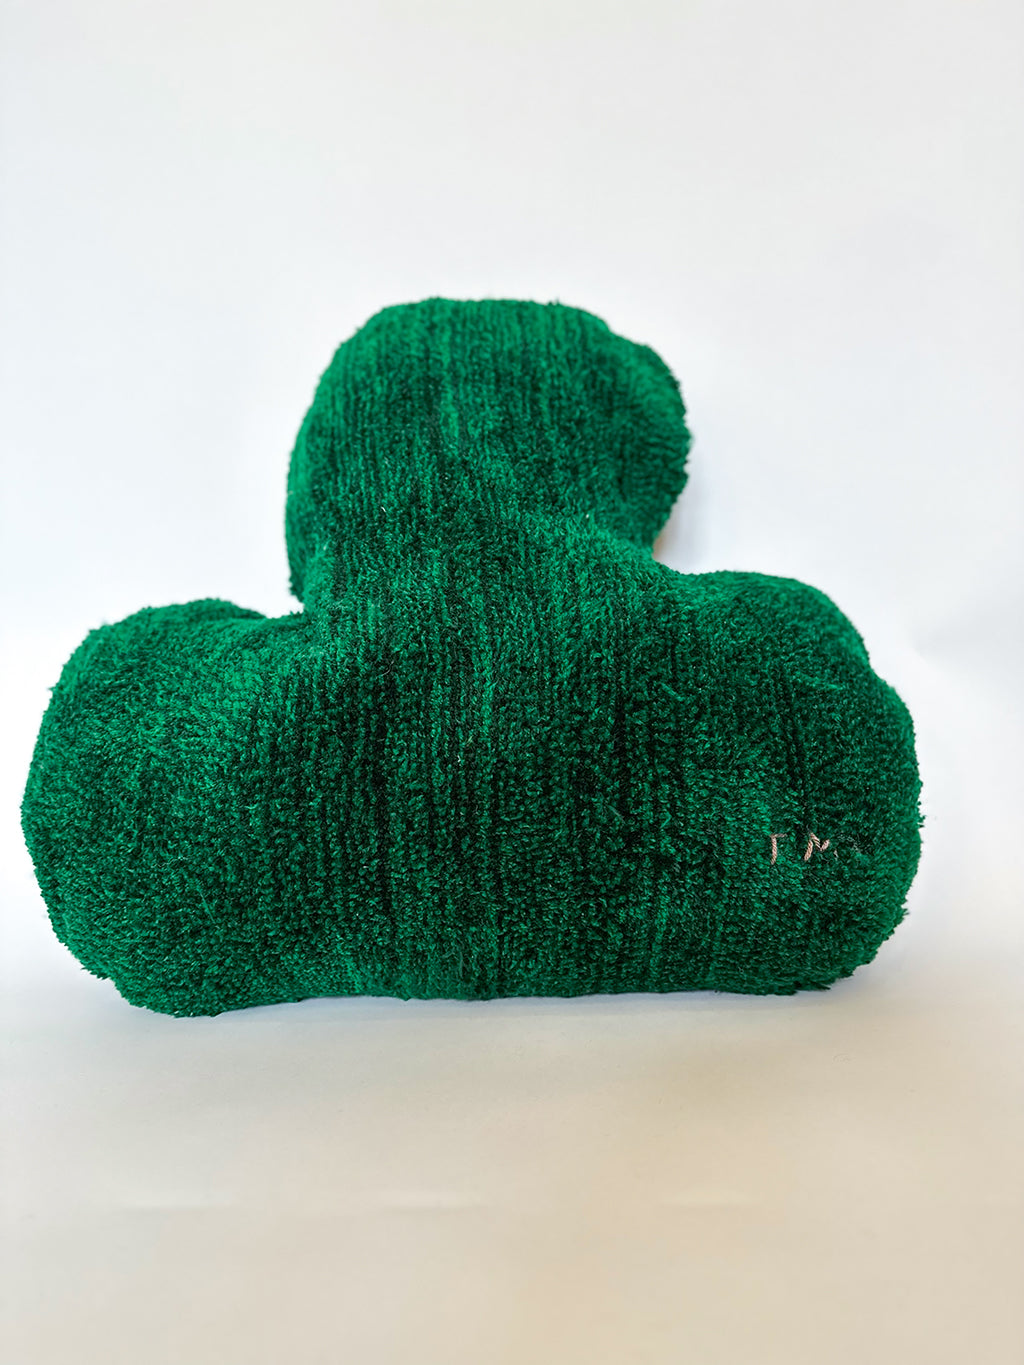 Soft sculpture of a green leaf 